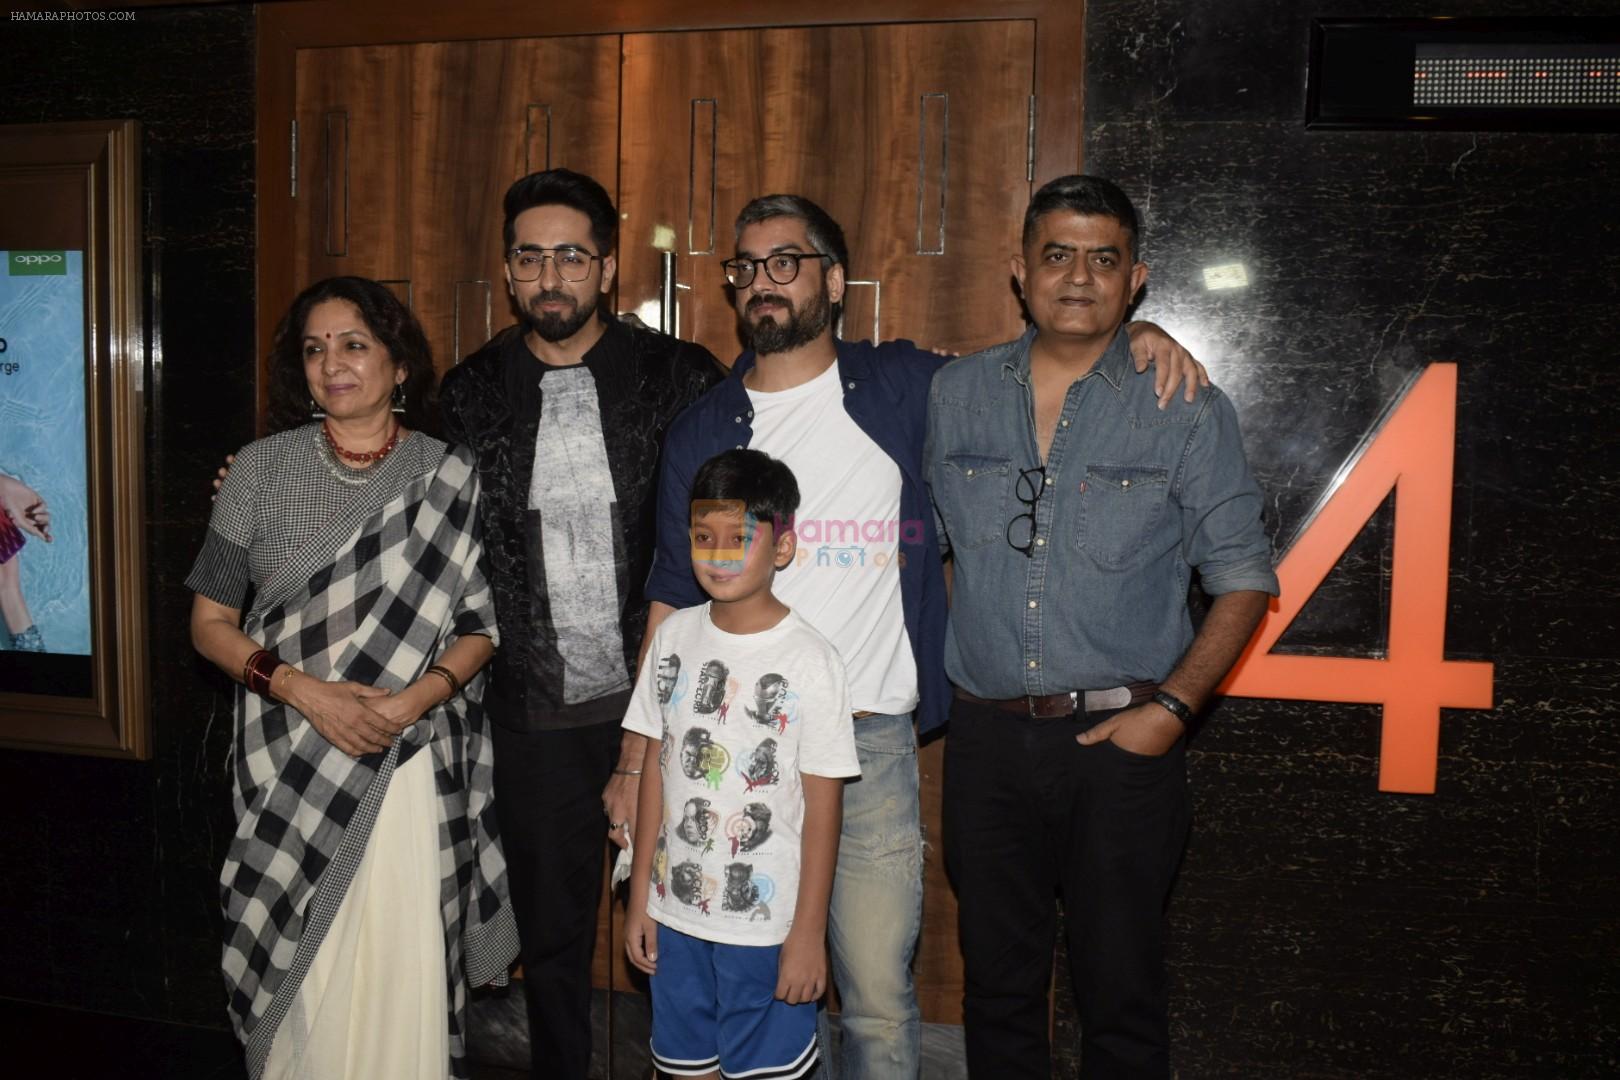 Neena Gupta, Gajraj Rao, Amit Sharma at the promotion of film Badhaai Ho in Pvr Ecx In Andheri on 19th Oct 2018